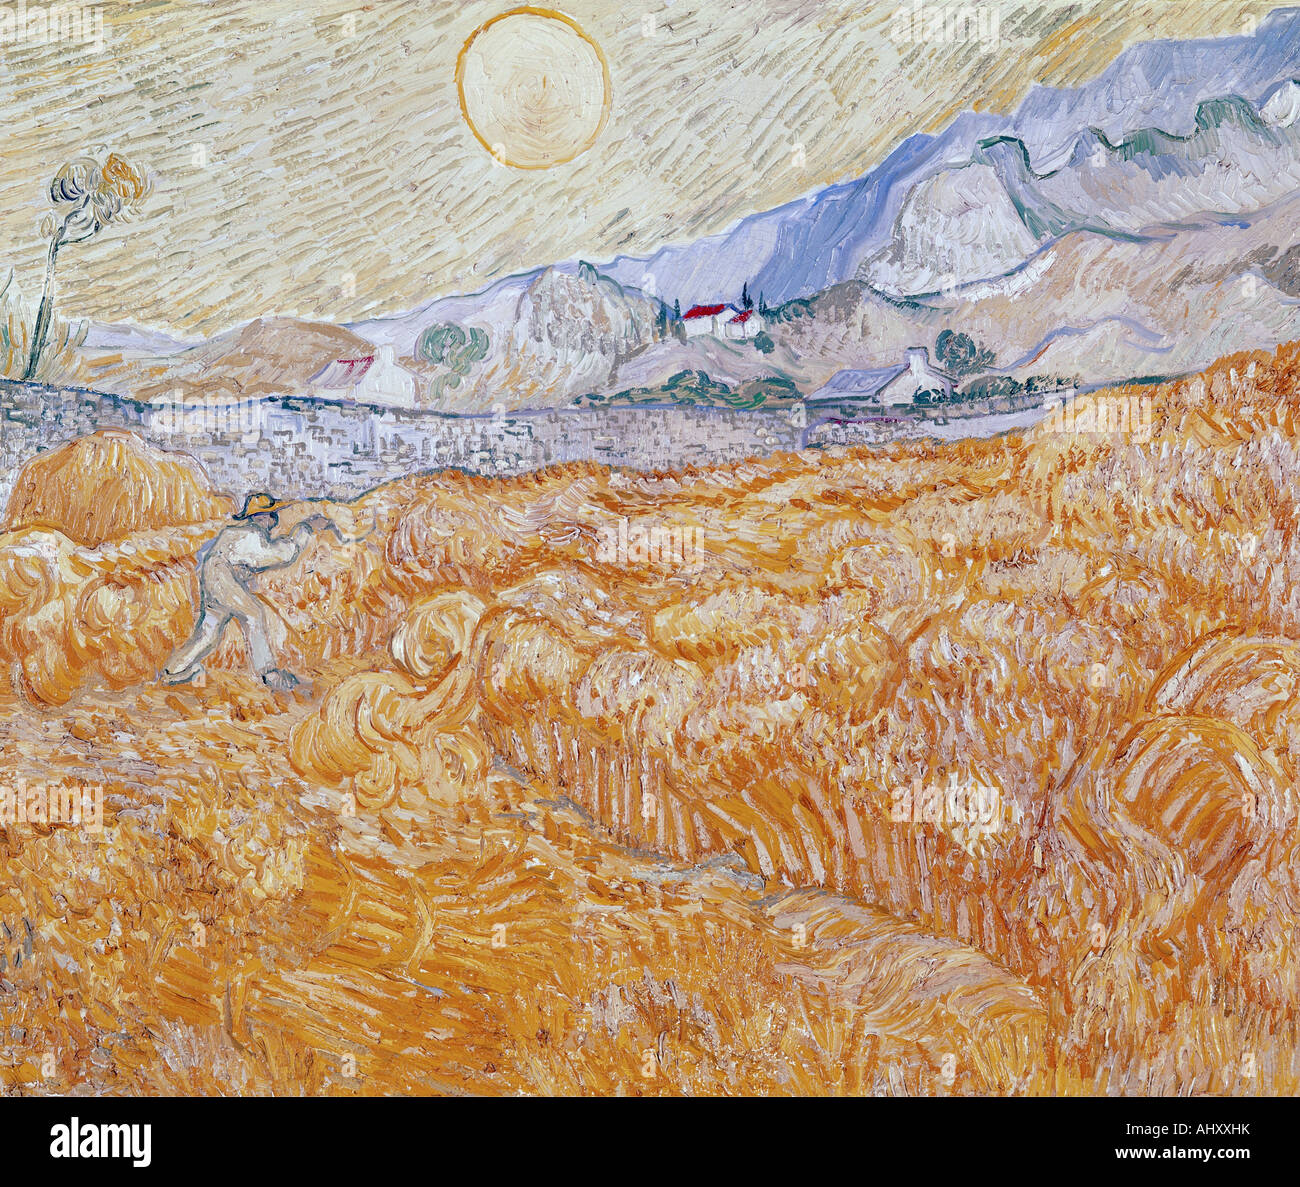 'fine arts, Gogh, Vincent van, (1853 - 1890), painting, 'the harvest', 1889, Folkwang museum, Essen, historic, historical, Eur Stock Photo